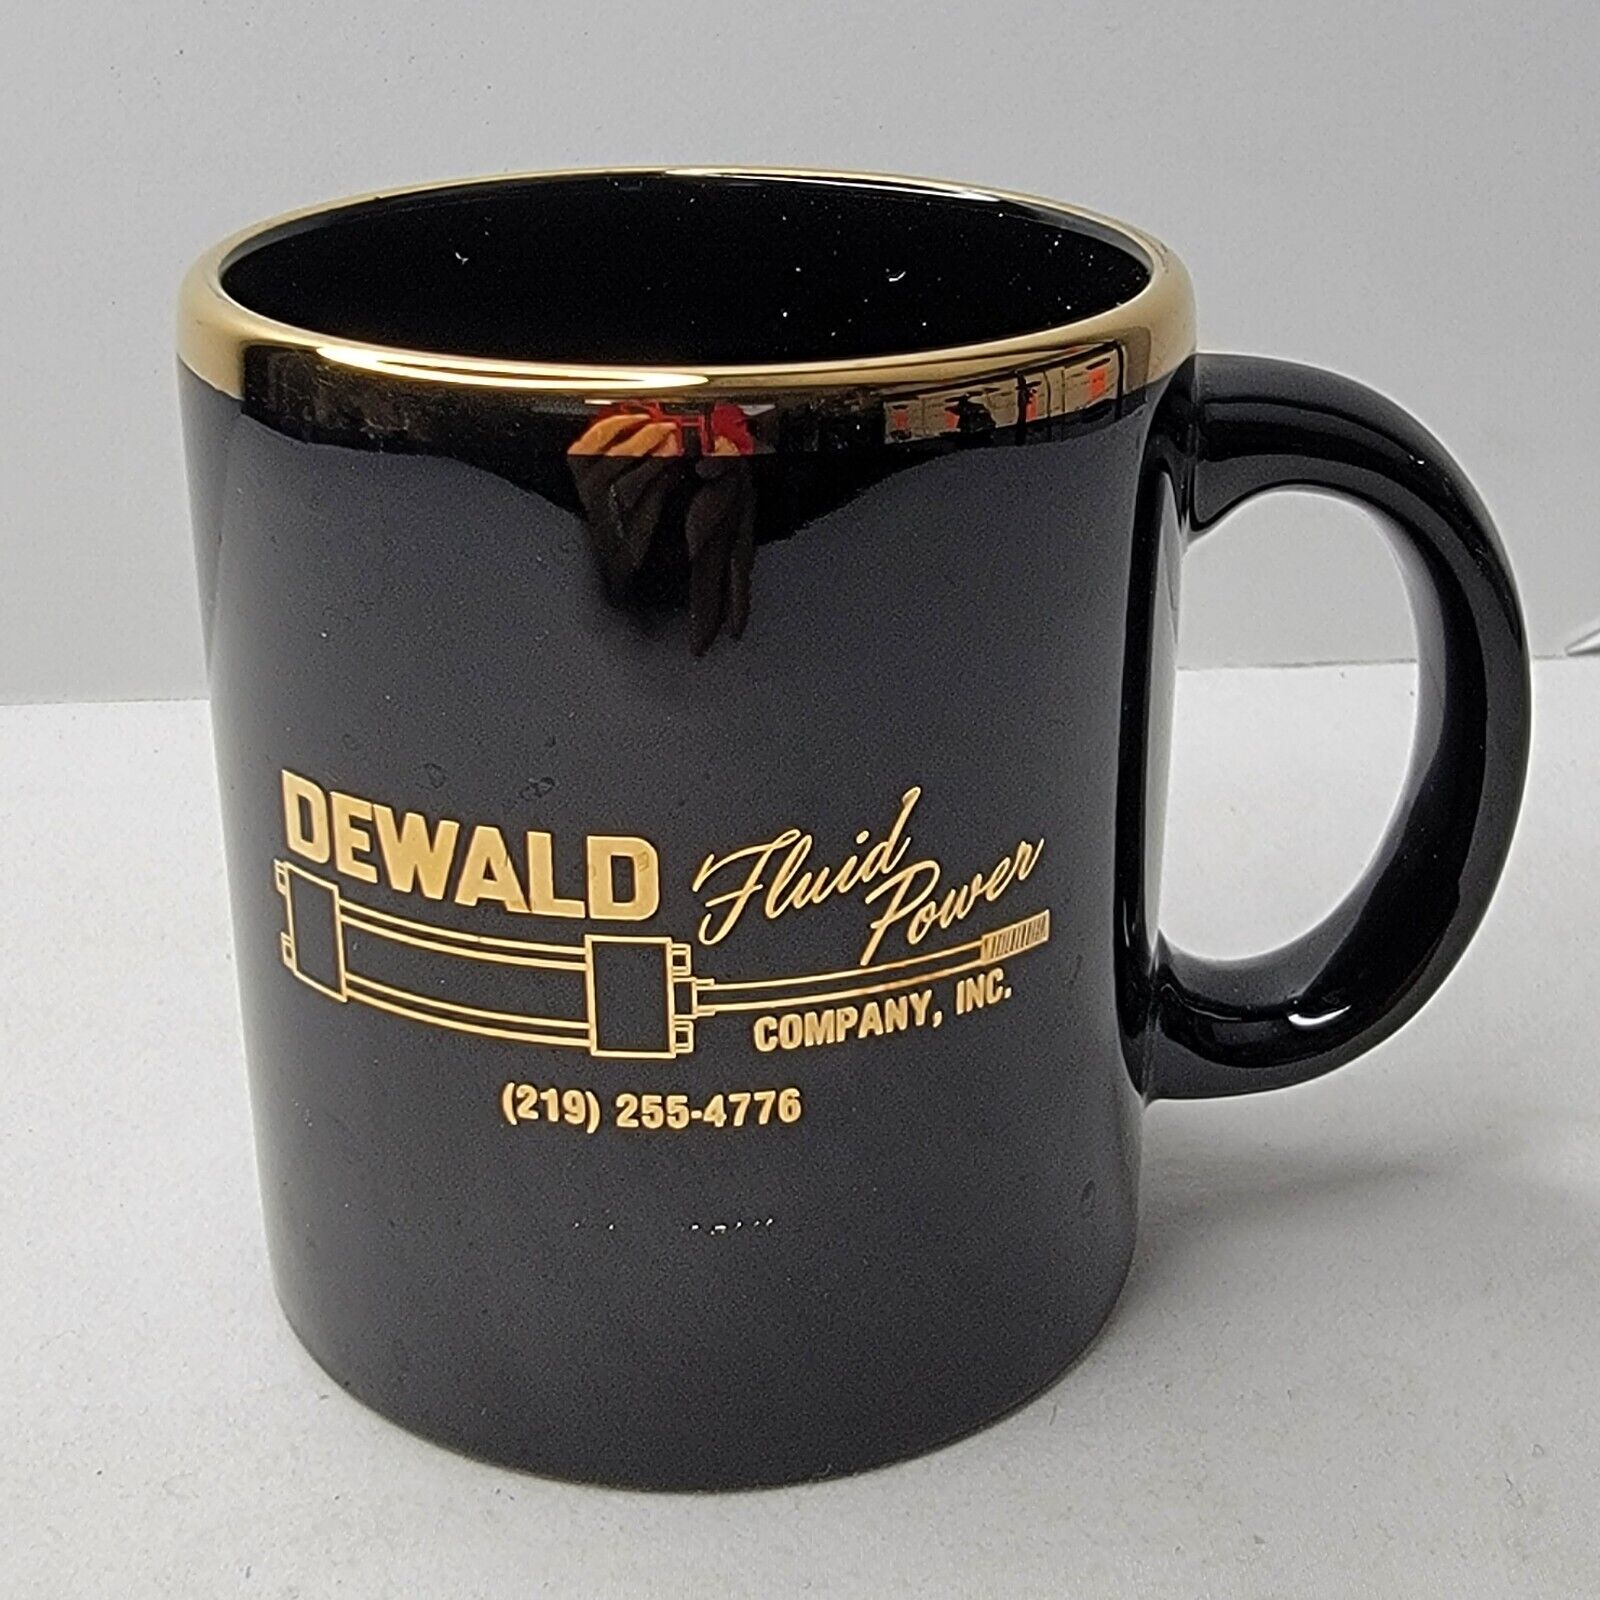  Dewald Fluid Power Company Coffee Cup Mug Black and Gold Waechtersbach Spain